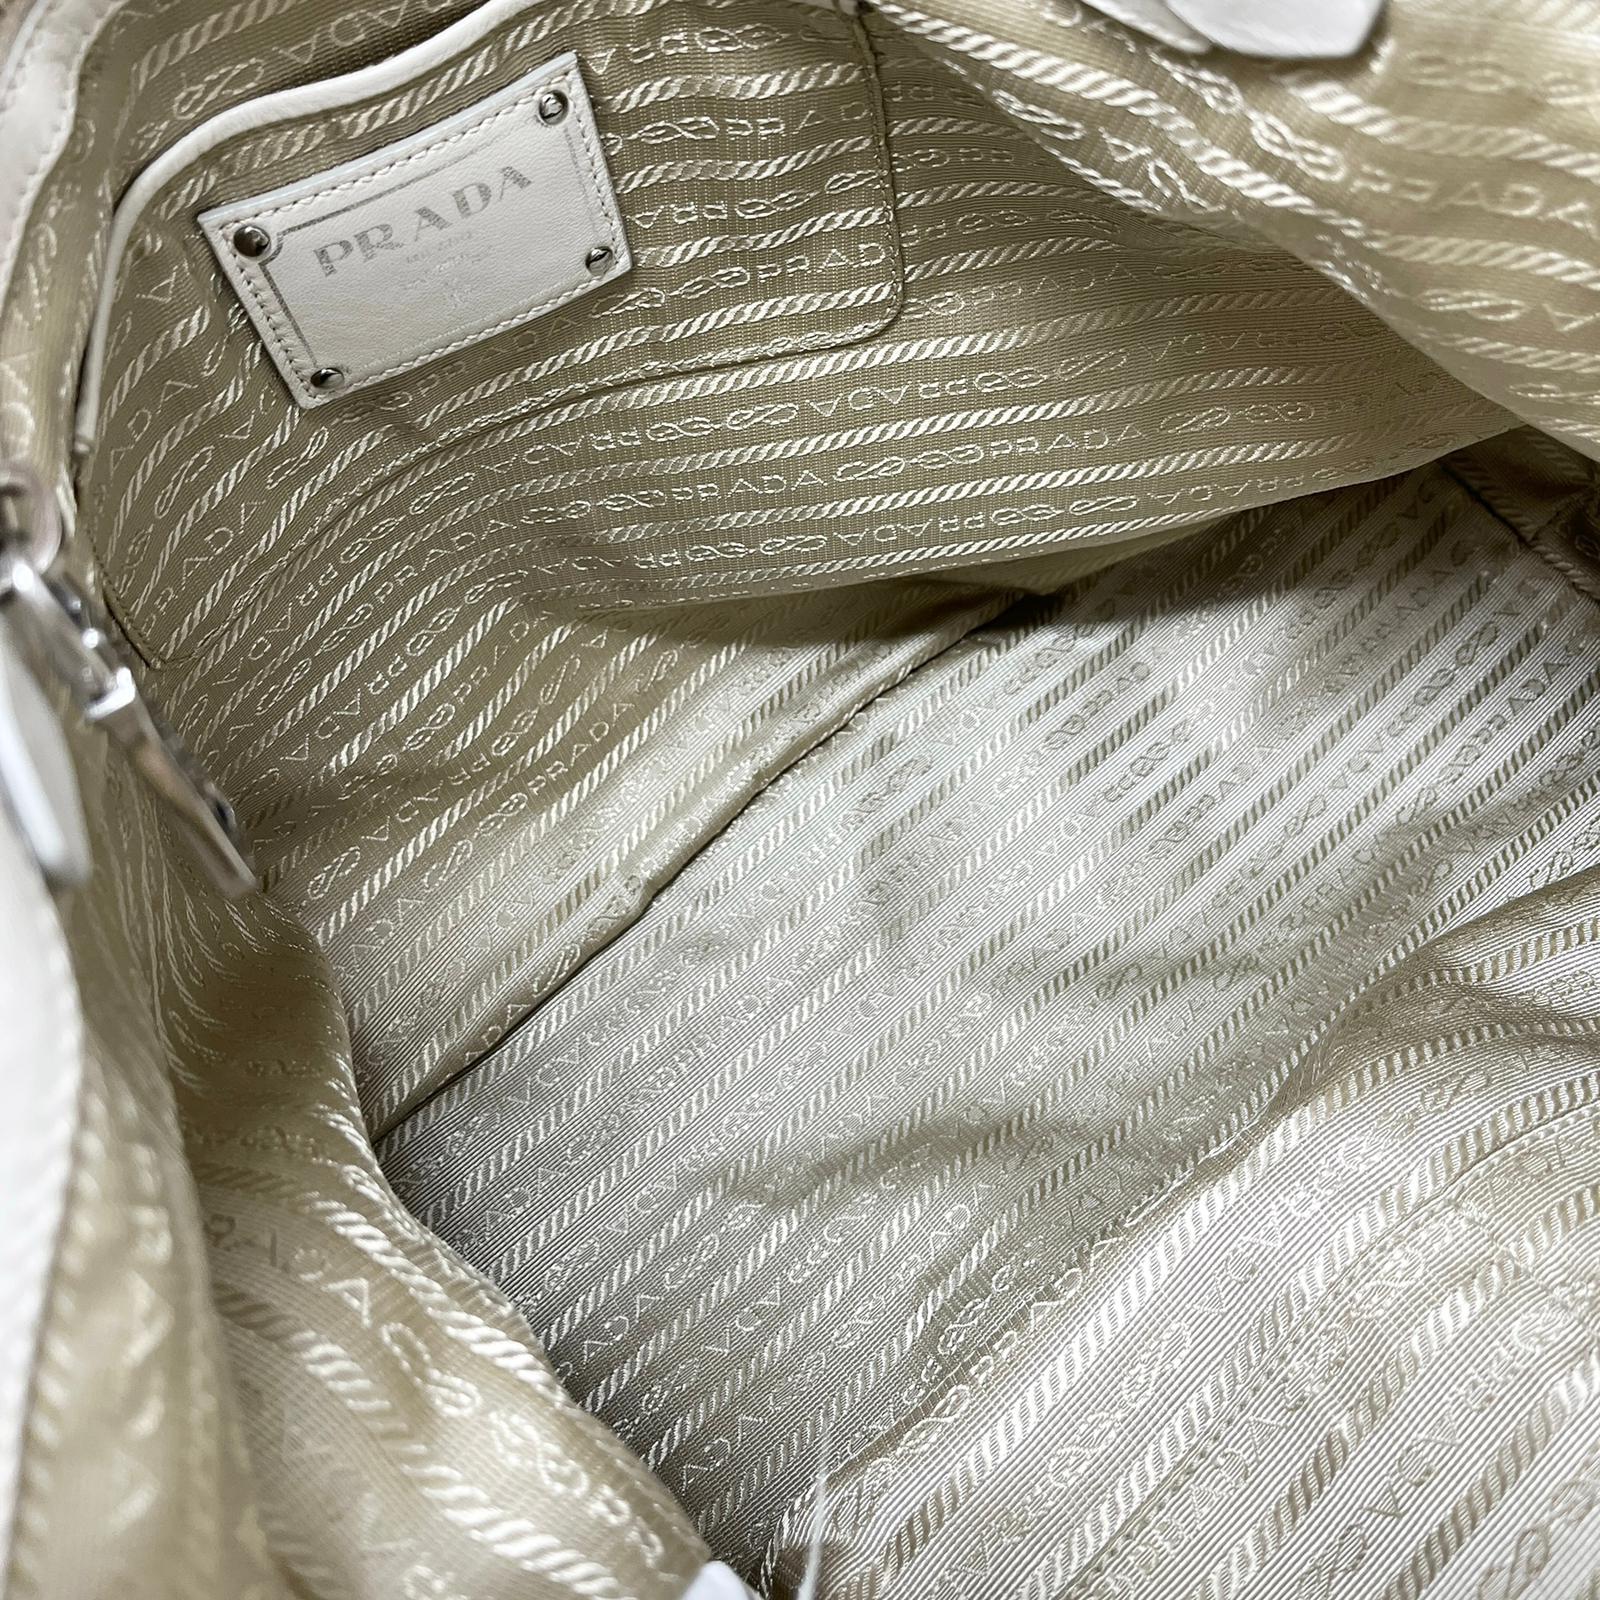 Prada Side Zip Handbags